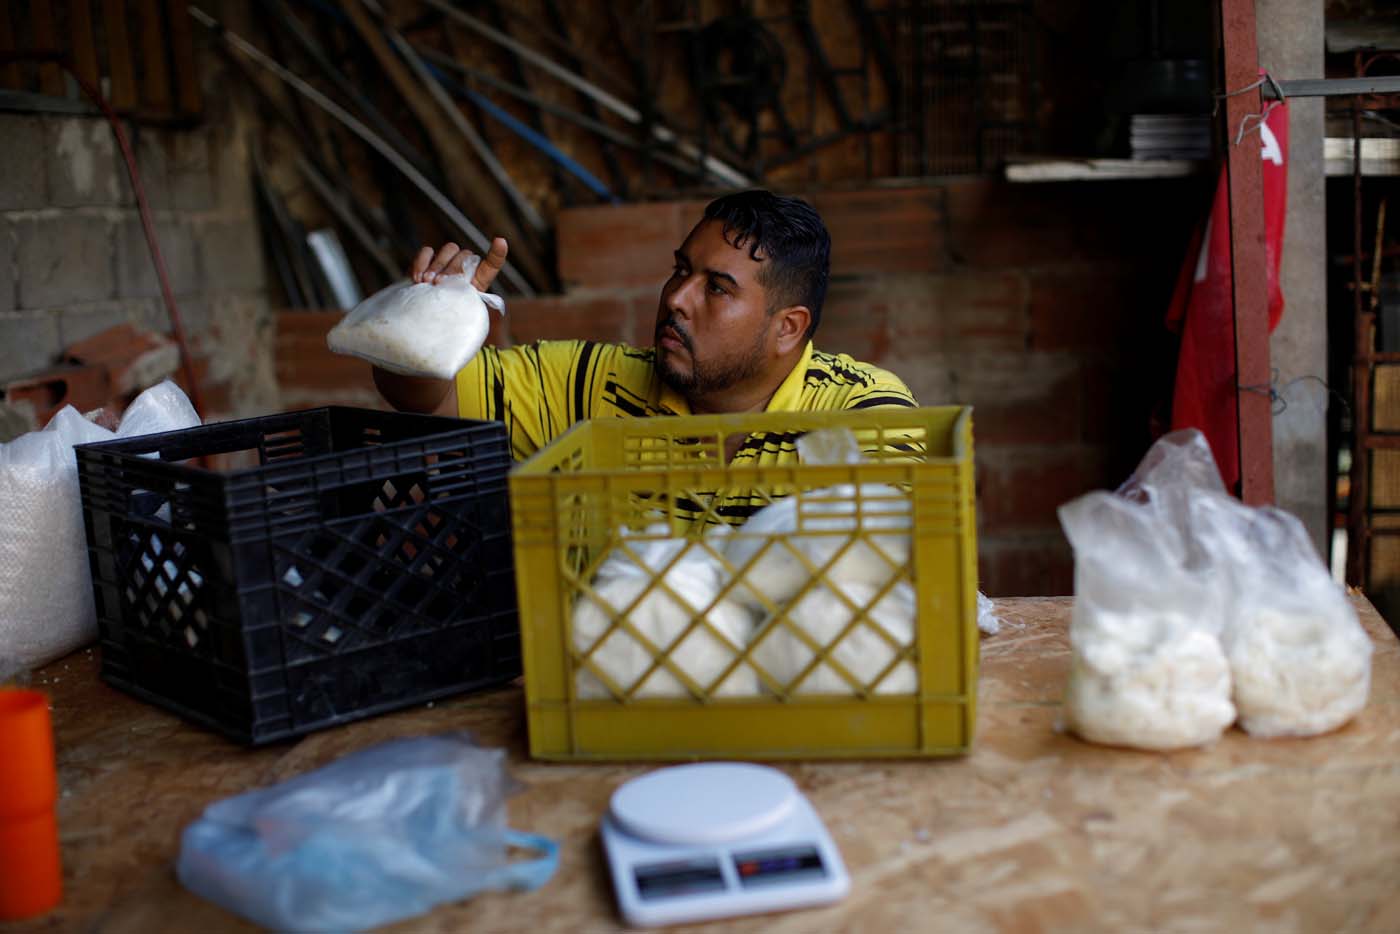 Medical equipment repairman Leandro Colmenares puts corn dough on plastic bags at the backyard of his house in Caracas, Venezuela October 3, 2017. Picture taken October 3, 2017. REUTERS/Carlos Garcia Rawlins